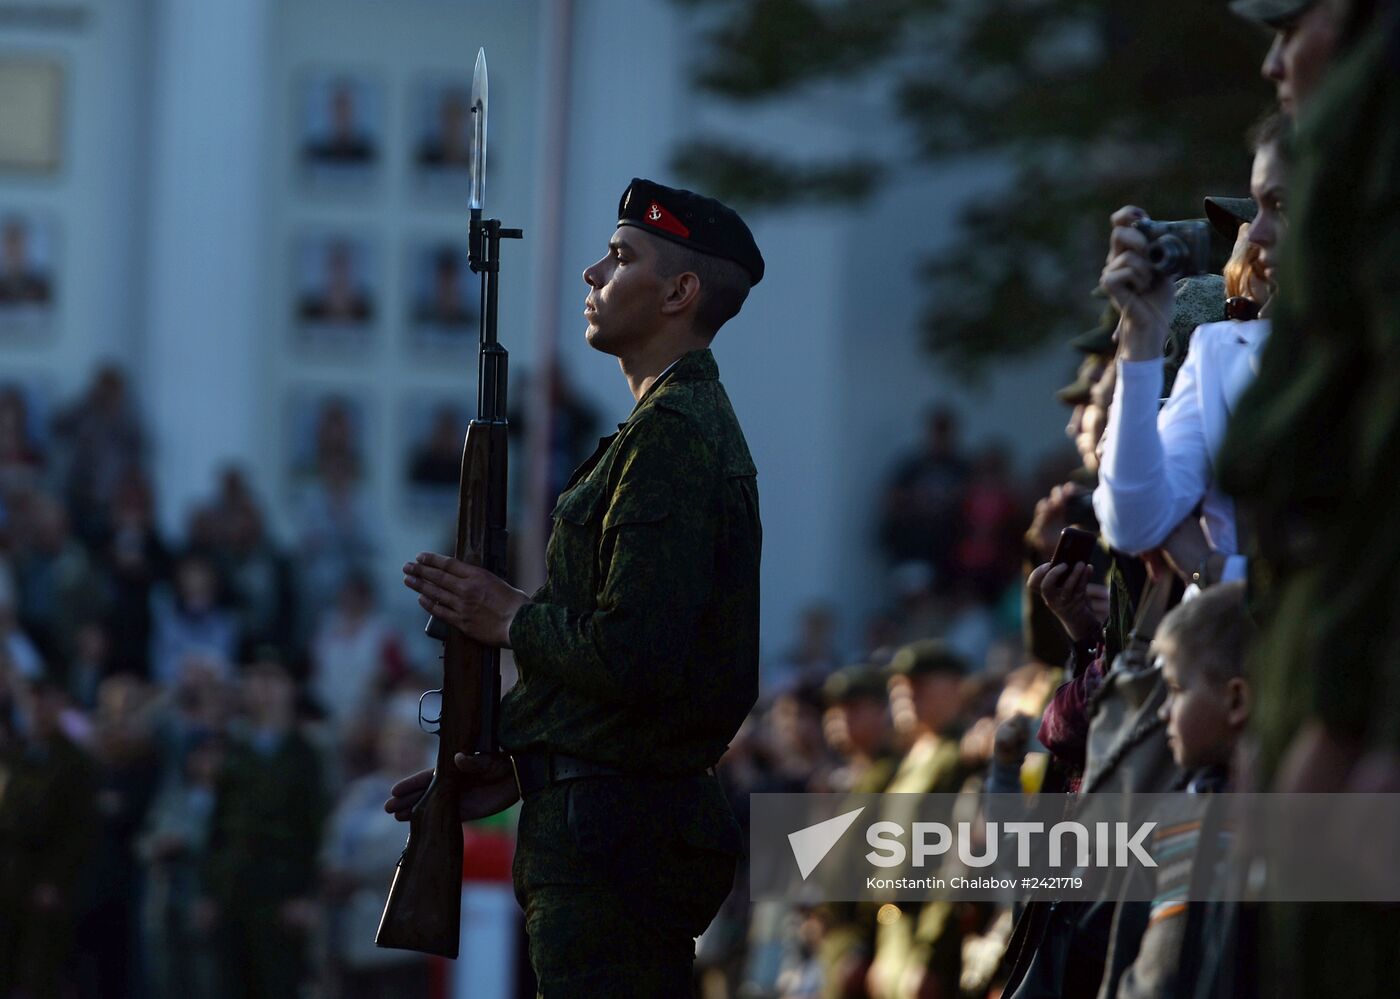 Victory Day Parade rehearsal in Sevastopol